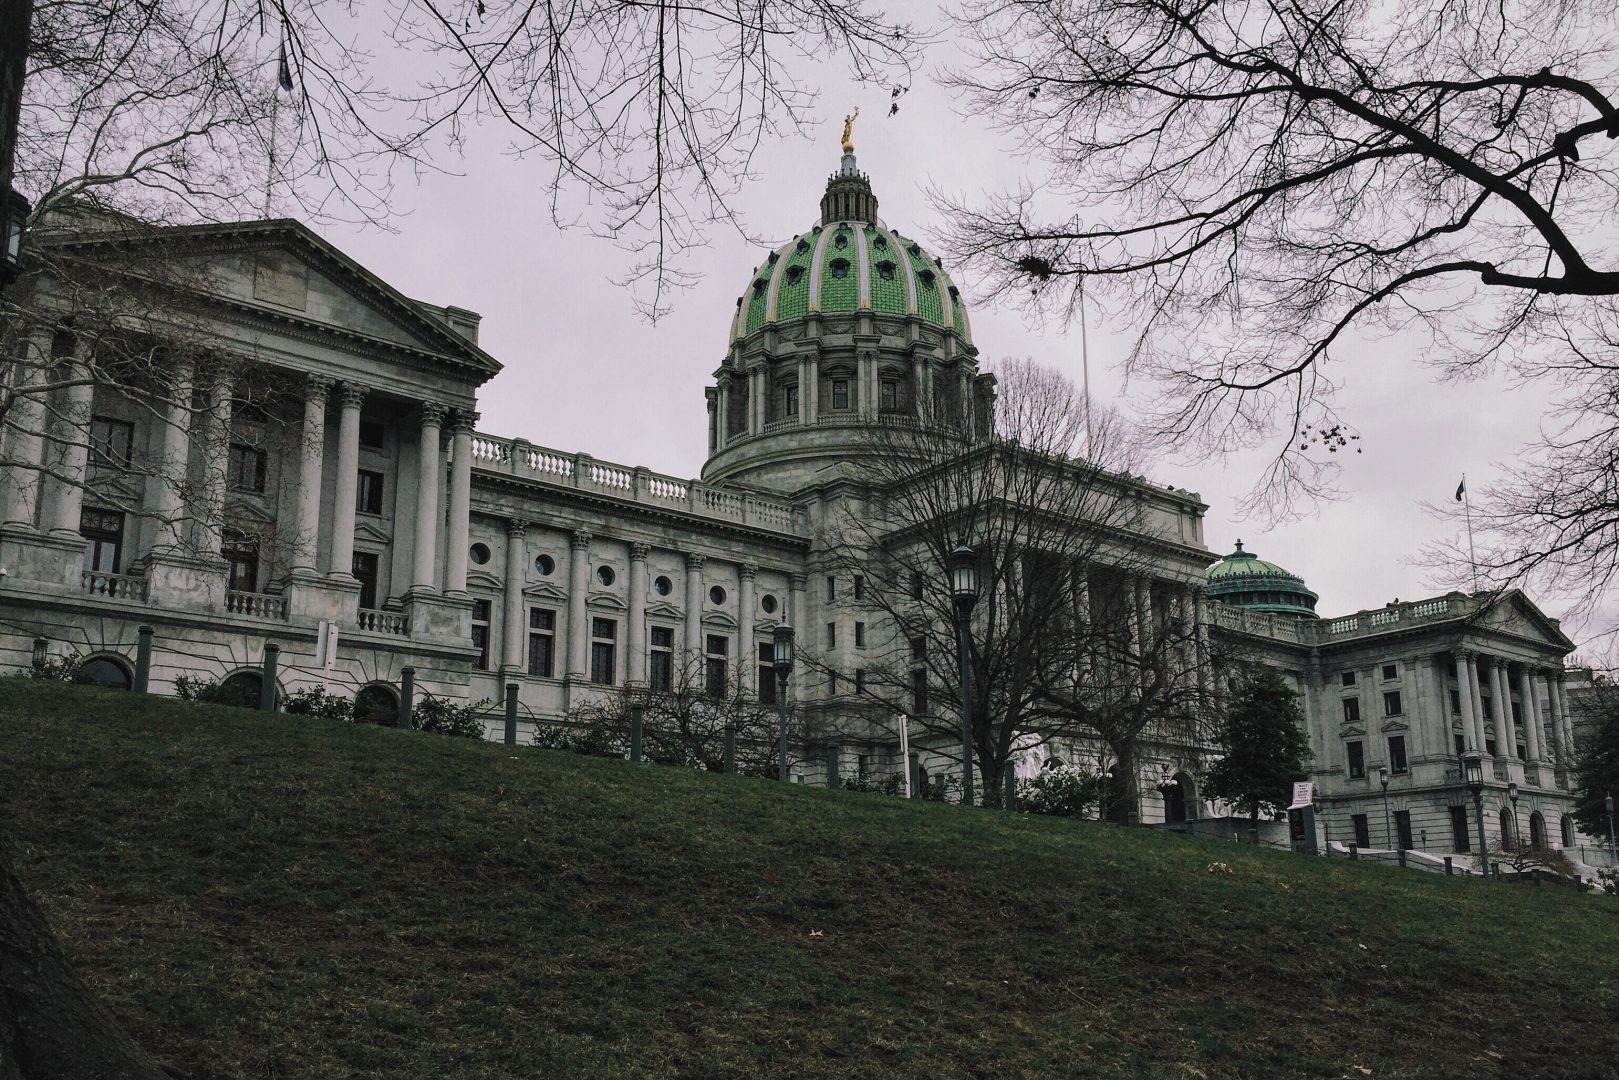 The state Capitol building in Harrisburg. (Tim Lambert/WITF)